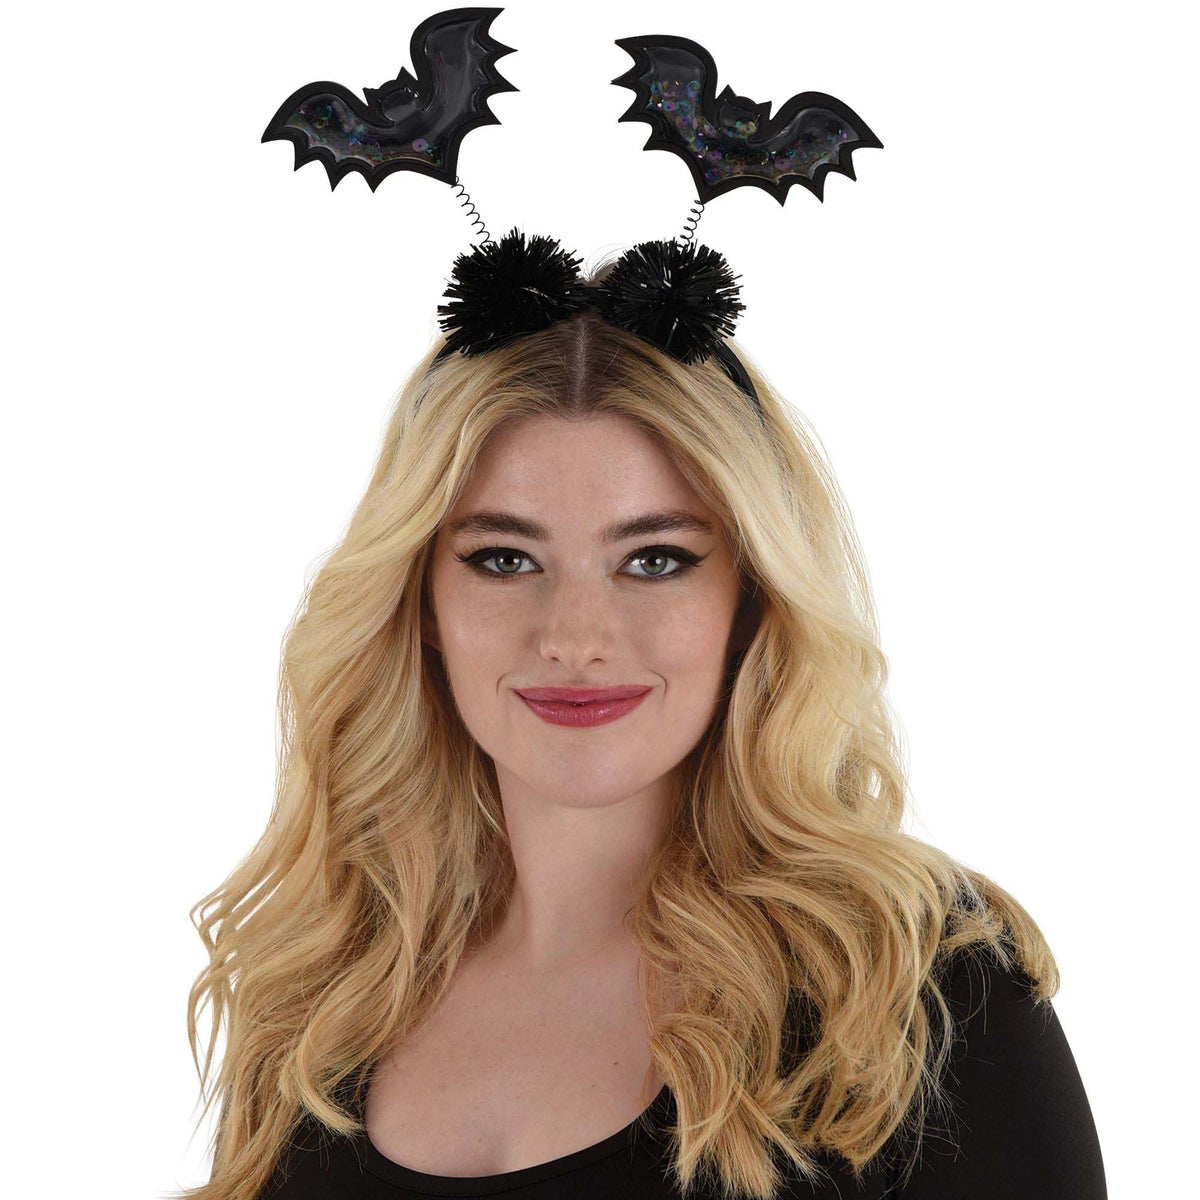 HALLOWEEN COSTUME CO. Costume Accessories Black Bats Shaker Headbopper for Adults 192937409886